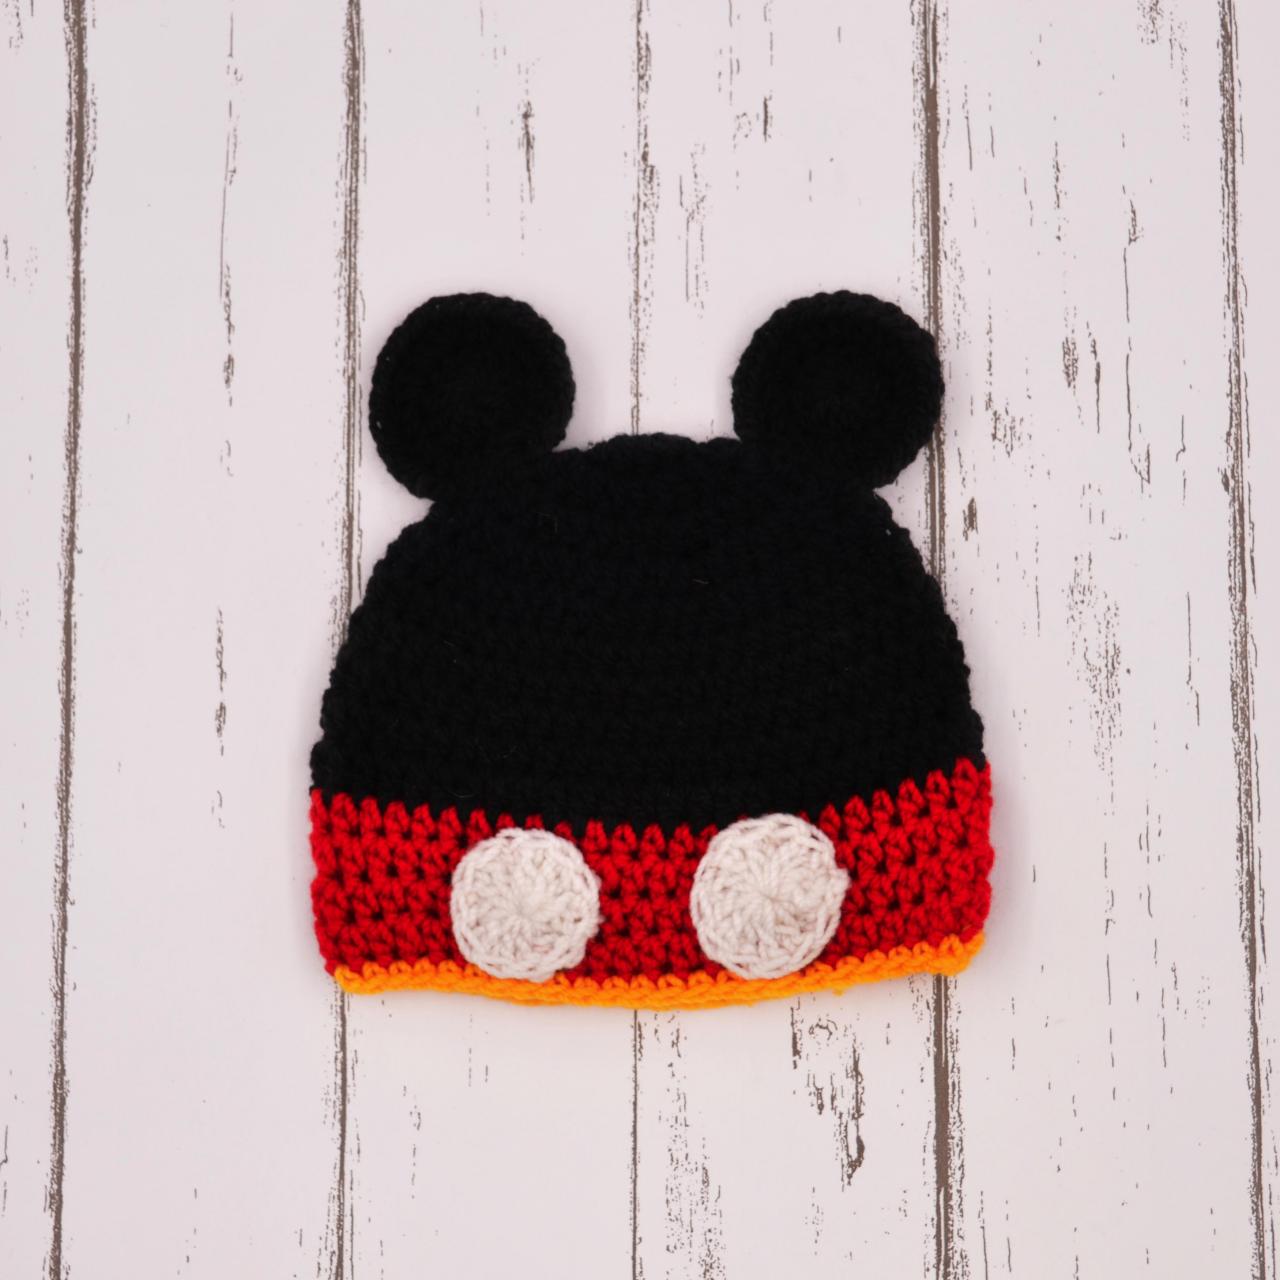 Crochet baby infant cap hat - Black micky